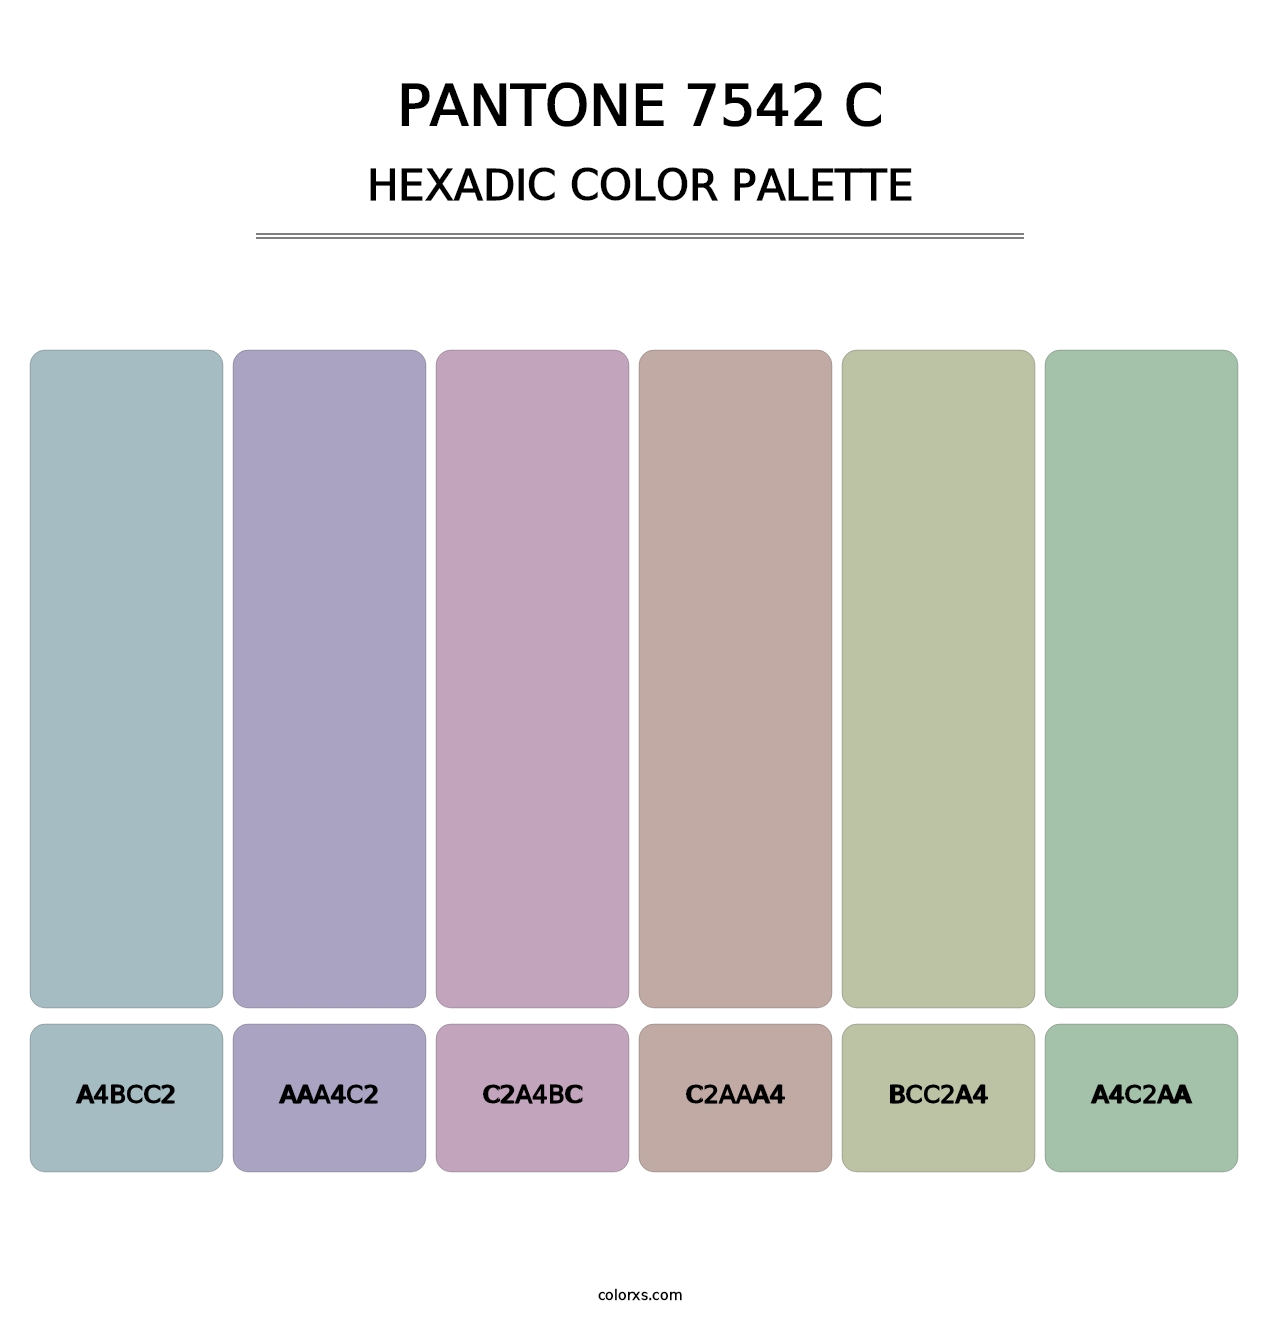 PANTONE 7542 C - Hexadic Color Palette